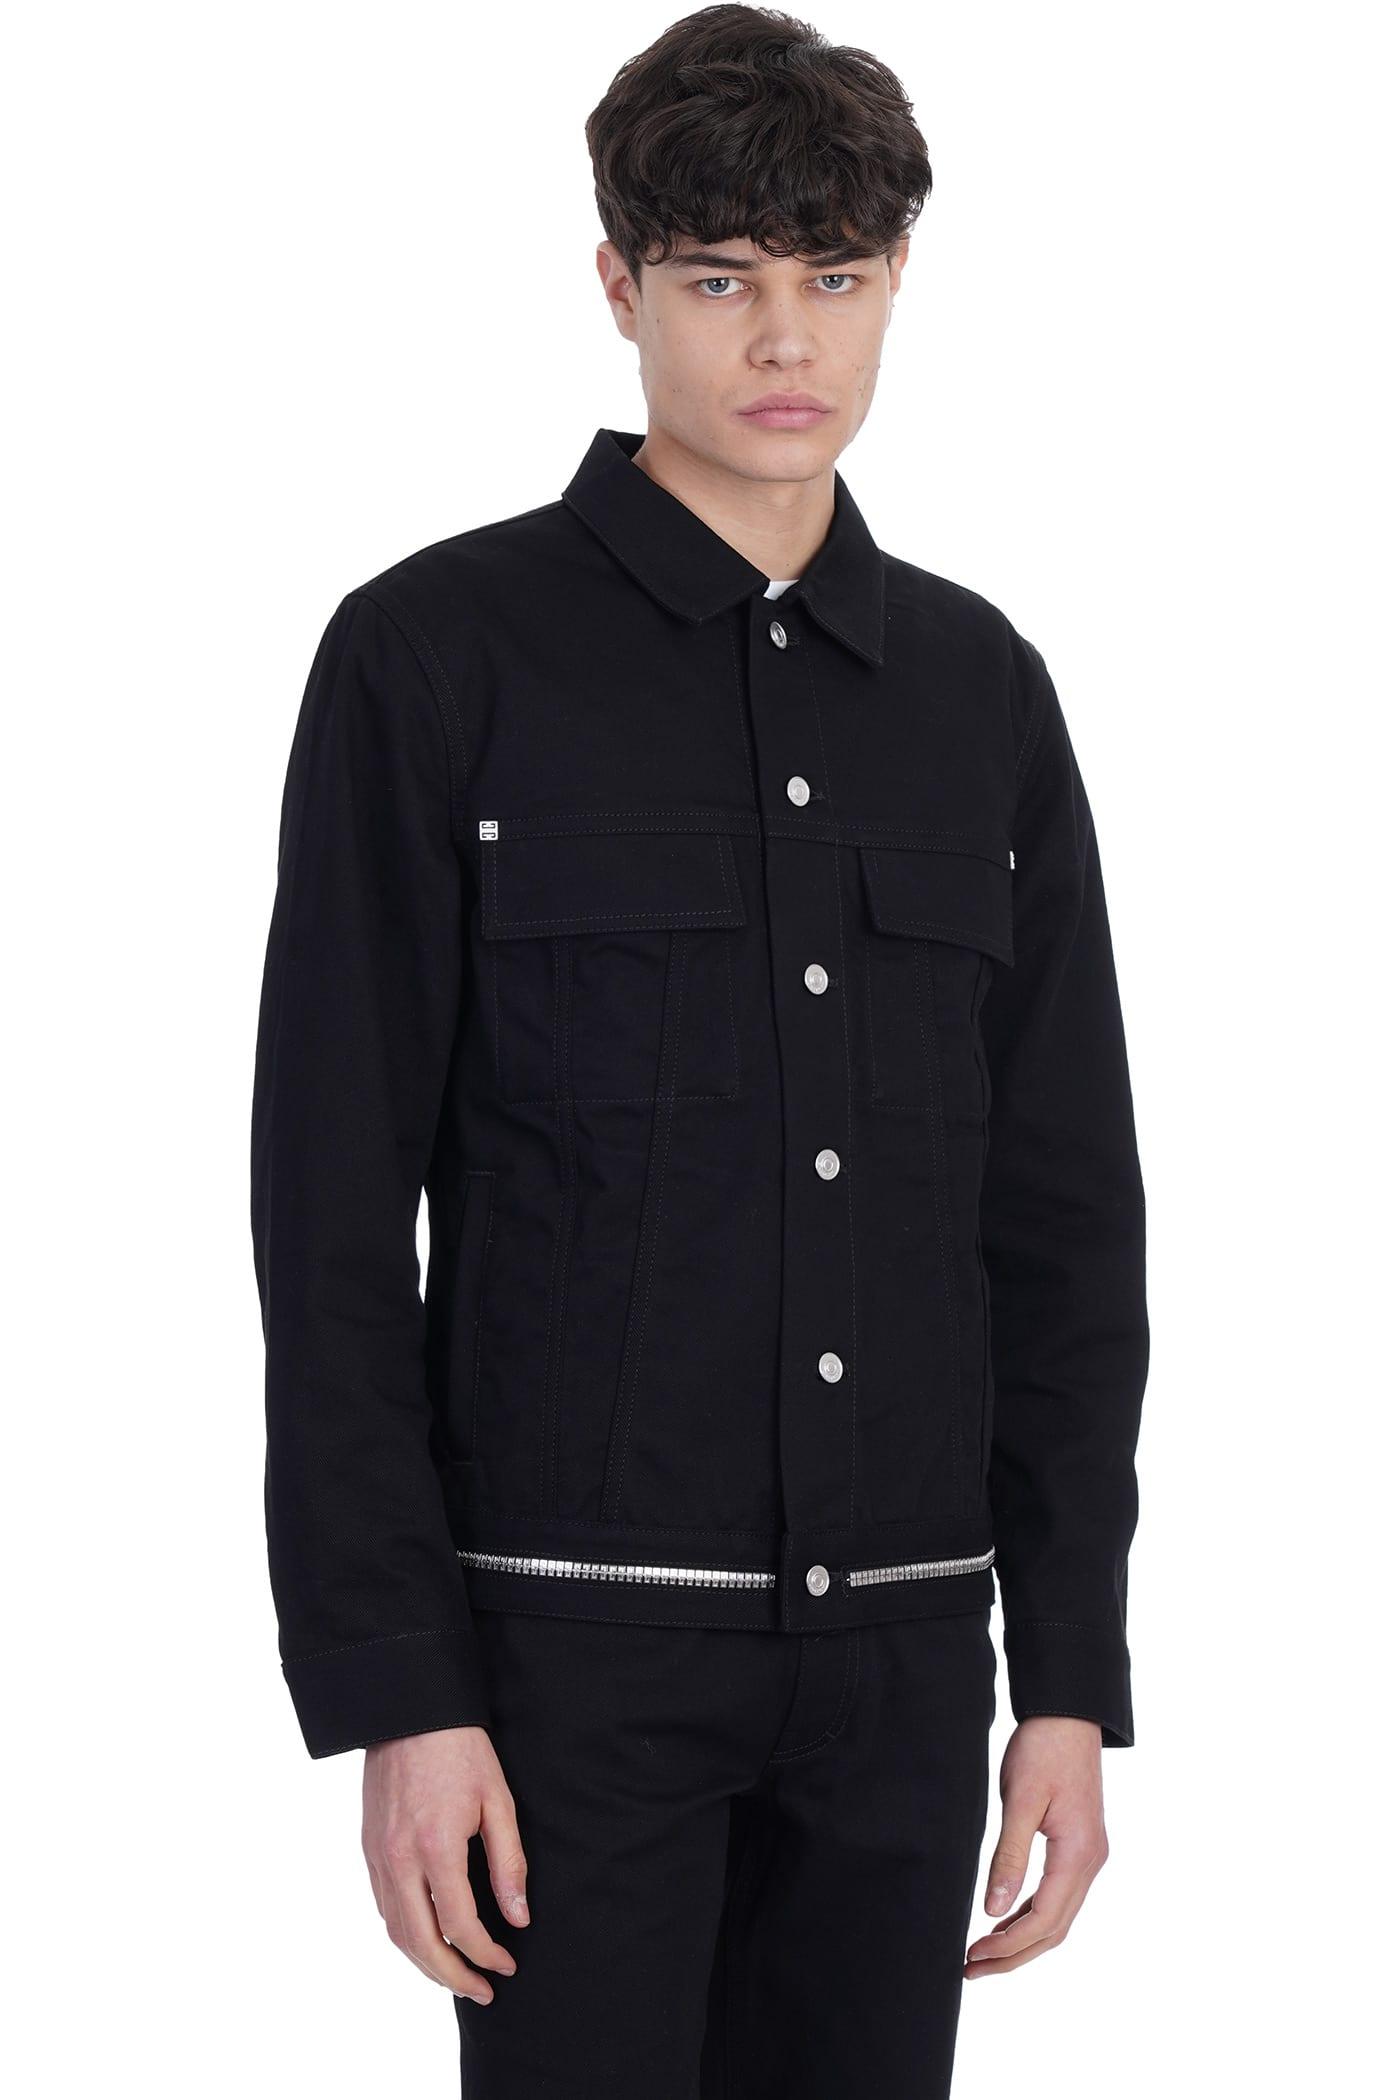 Givenchy Casual Jacket In Black Denim for Men | Lyst